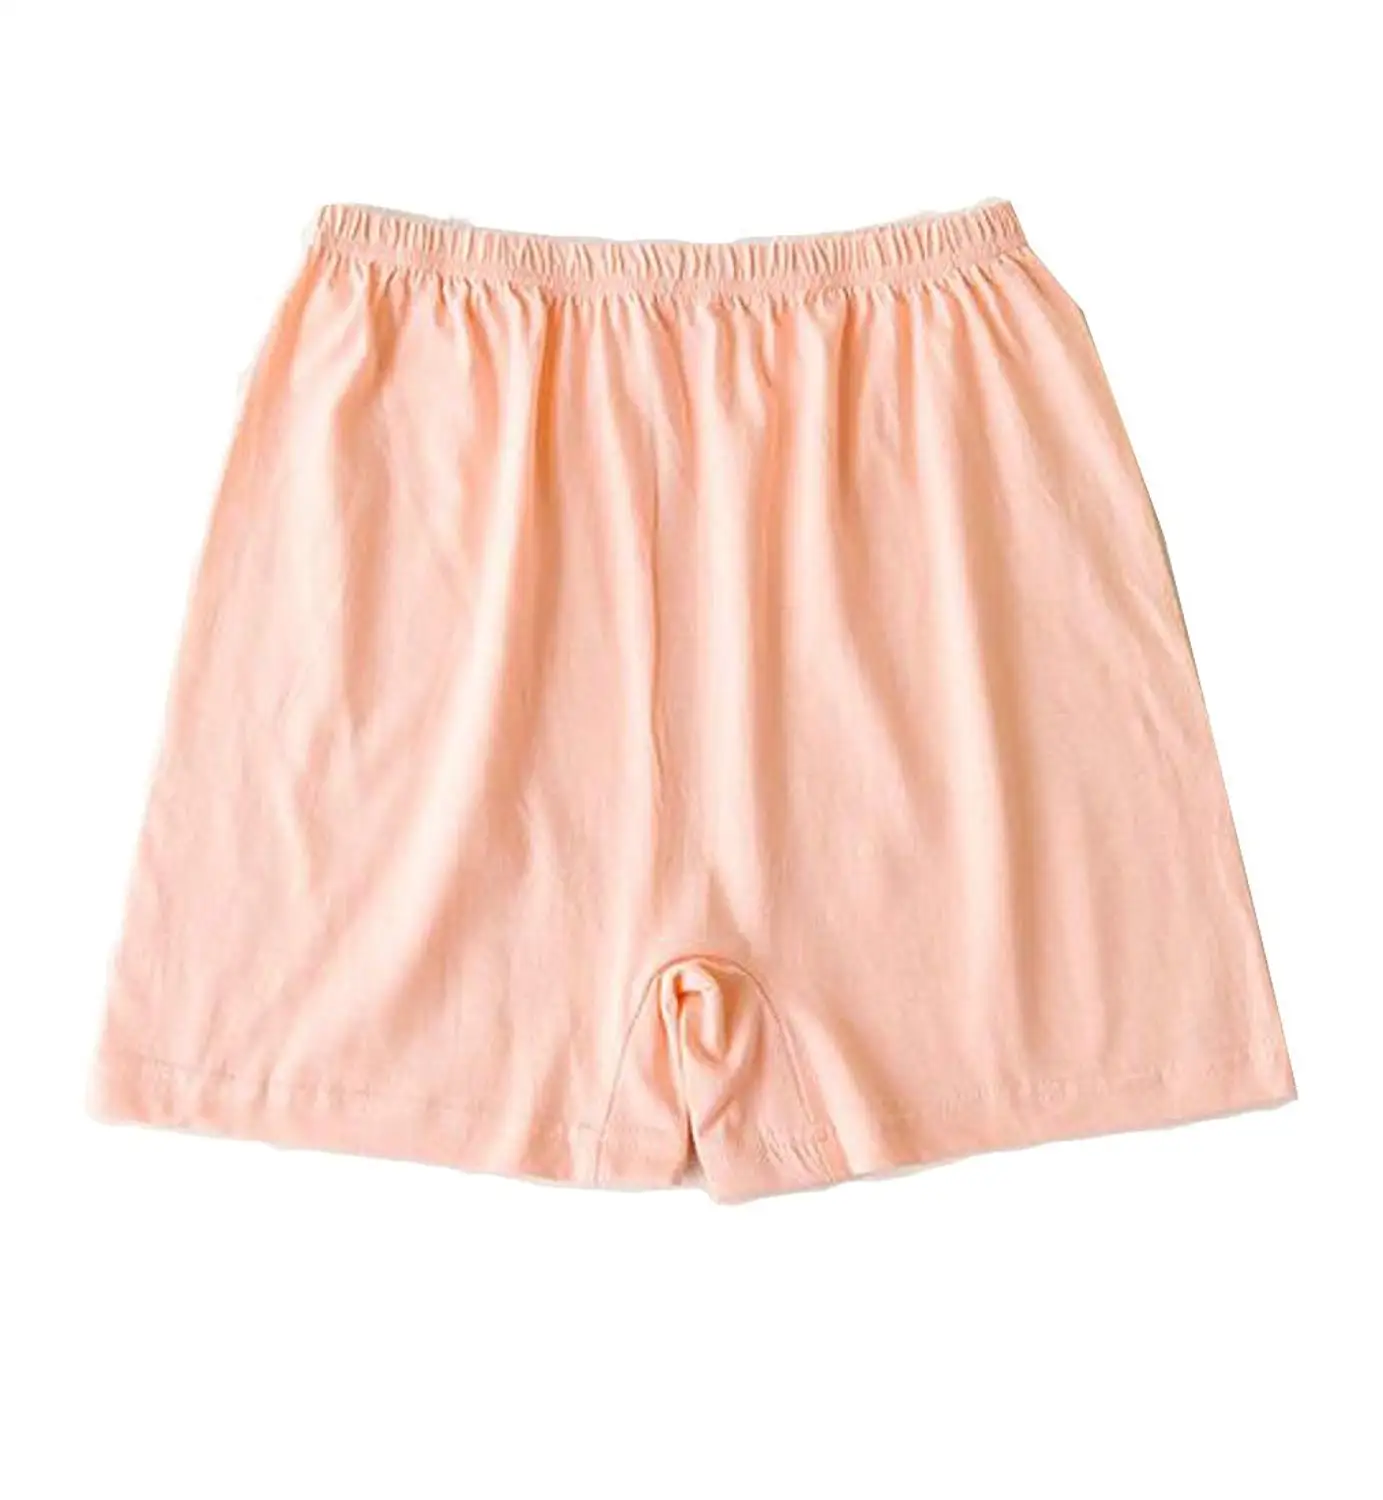 Cheap Panties Loose, find Panties Loose deals on line at Alibaba.com